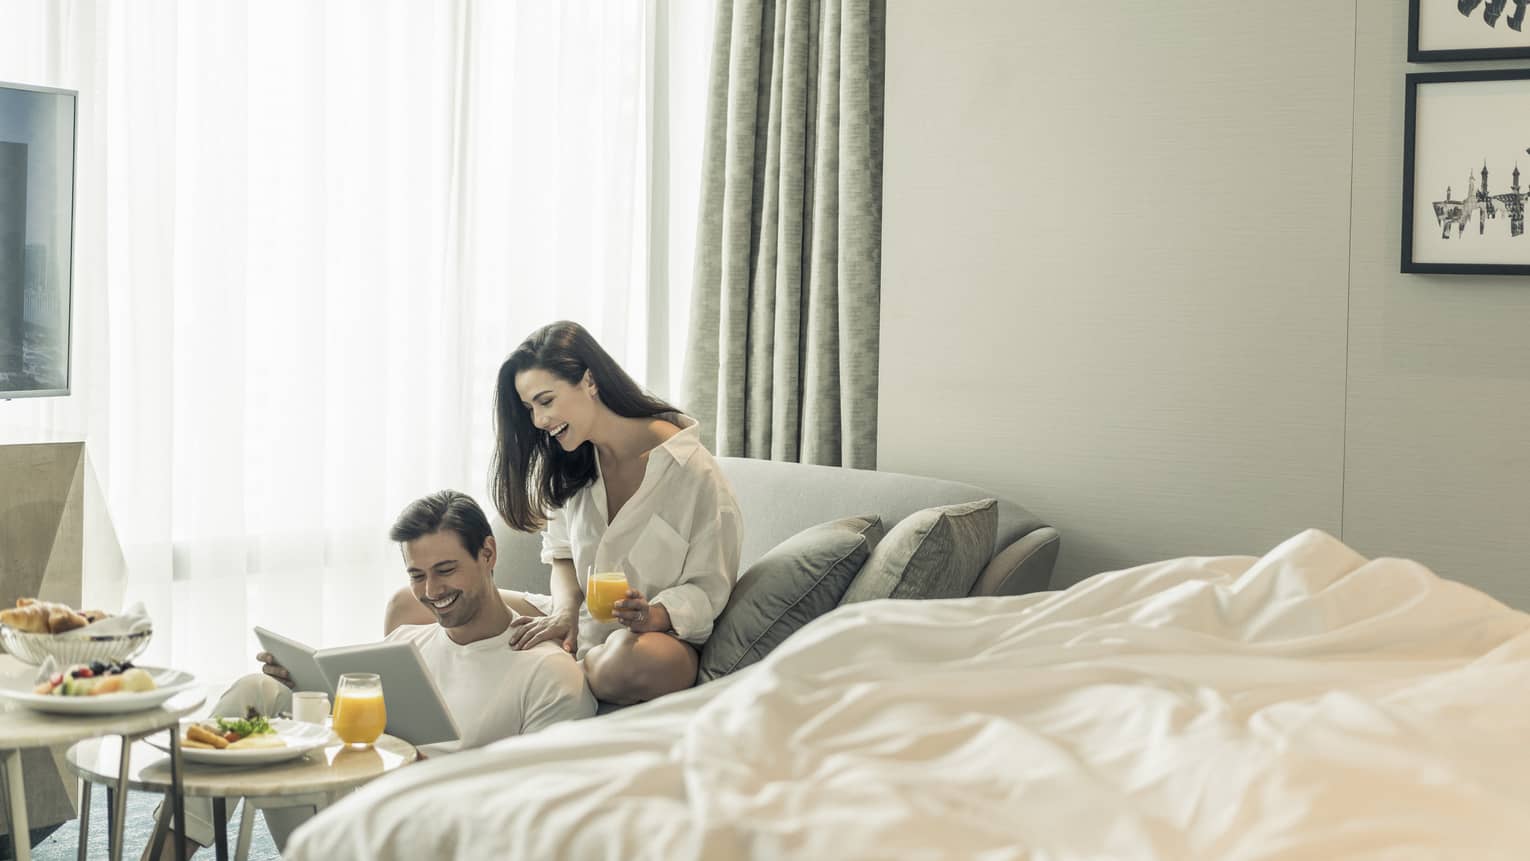 Couple wearing pyjamas enjoy in-room dining breakfast at window beside unmade bed 